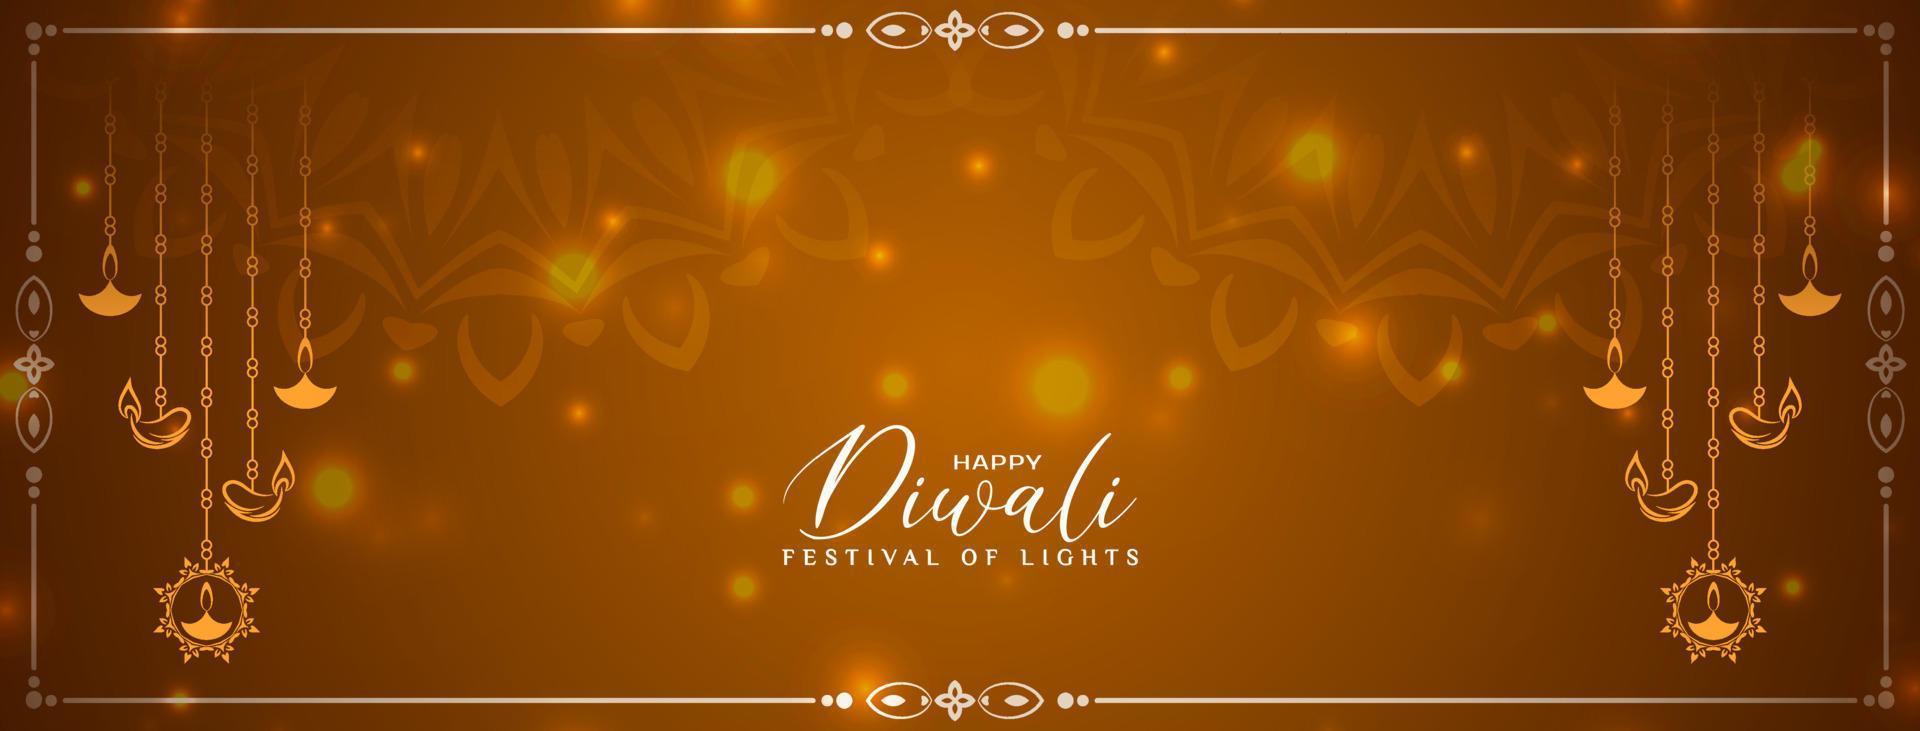 feliz diwali festival indiano banner com lâmpadas decorativas penduradas vetor